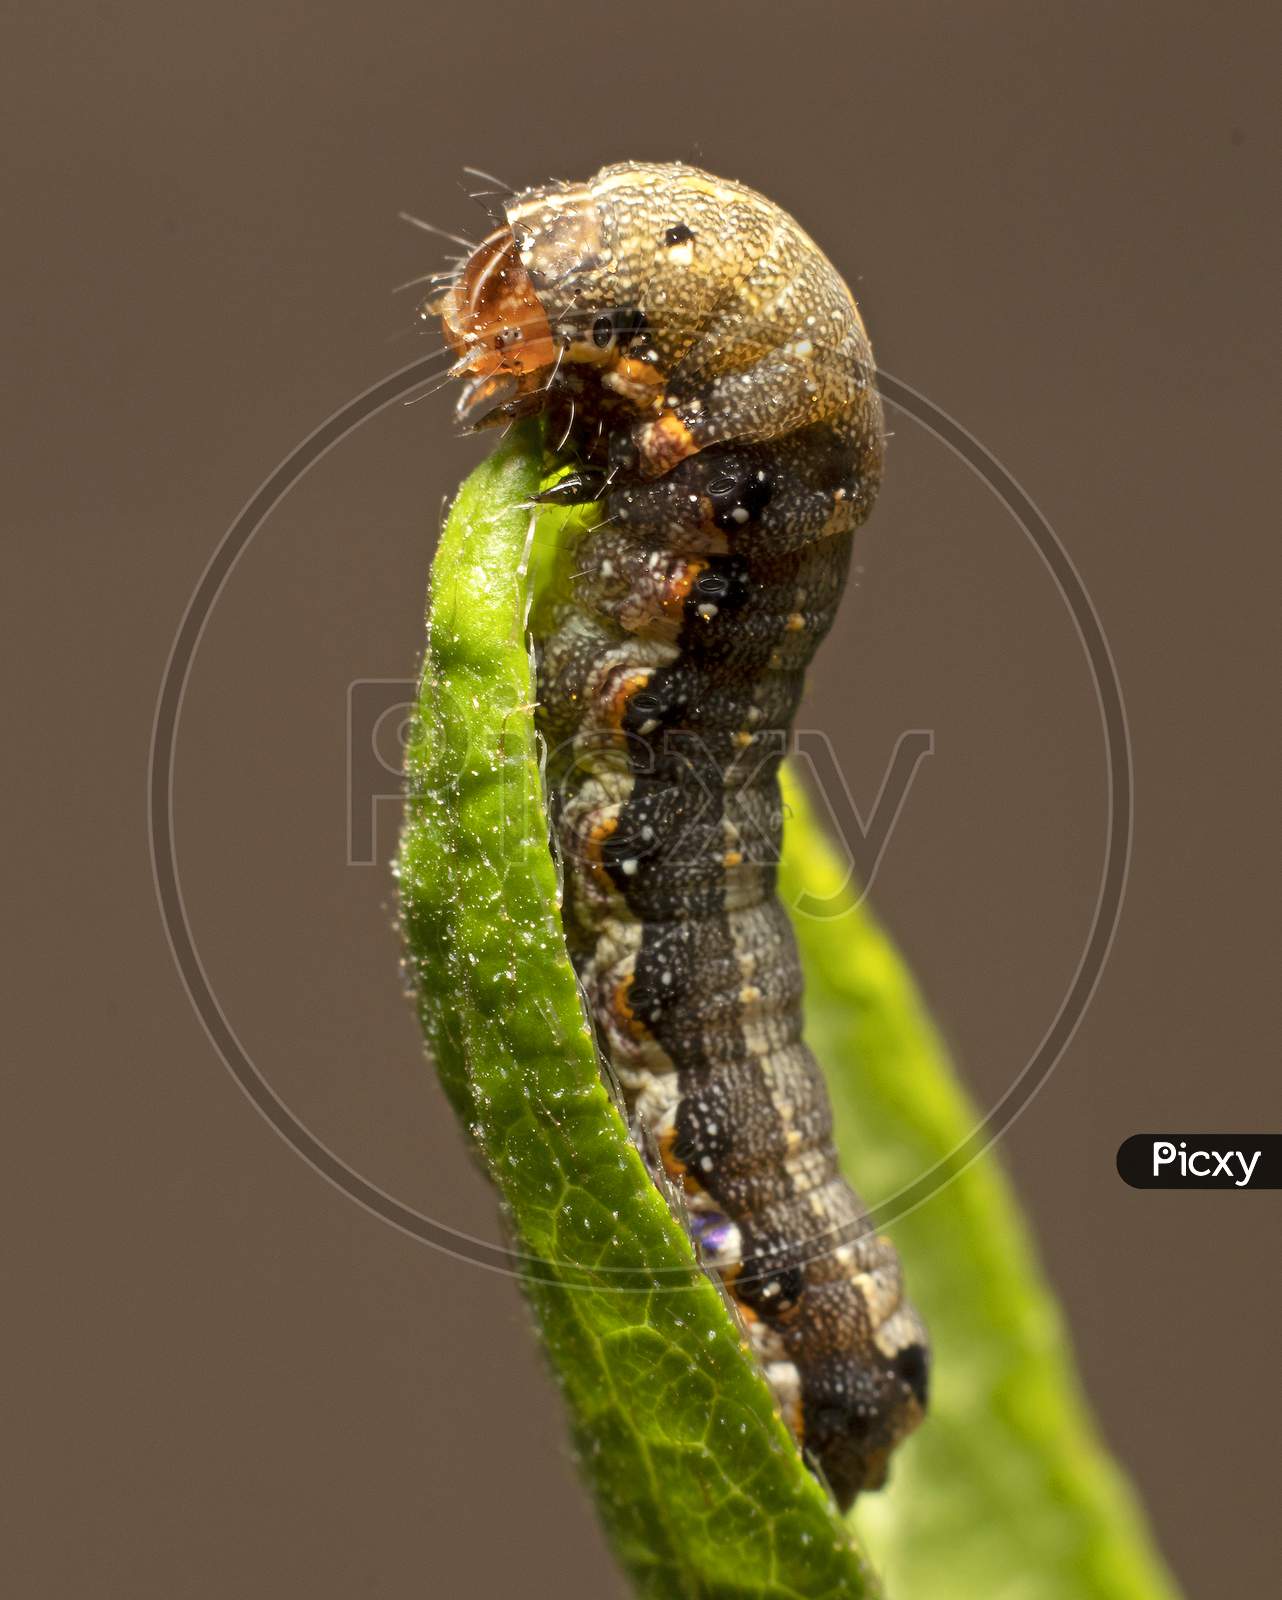 A larva